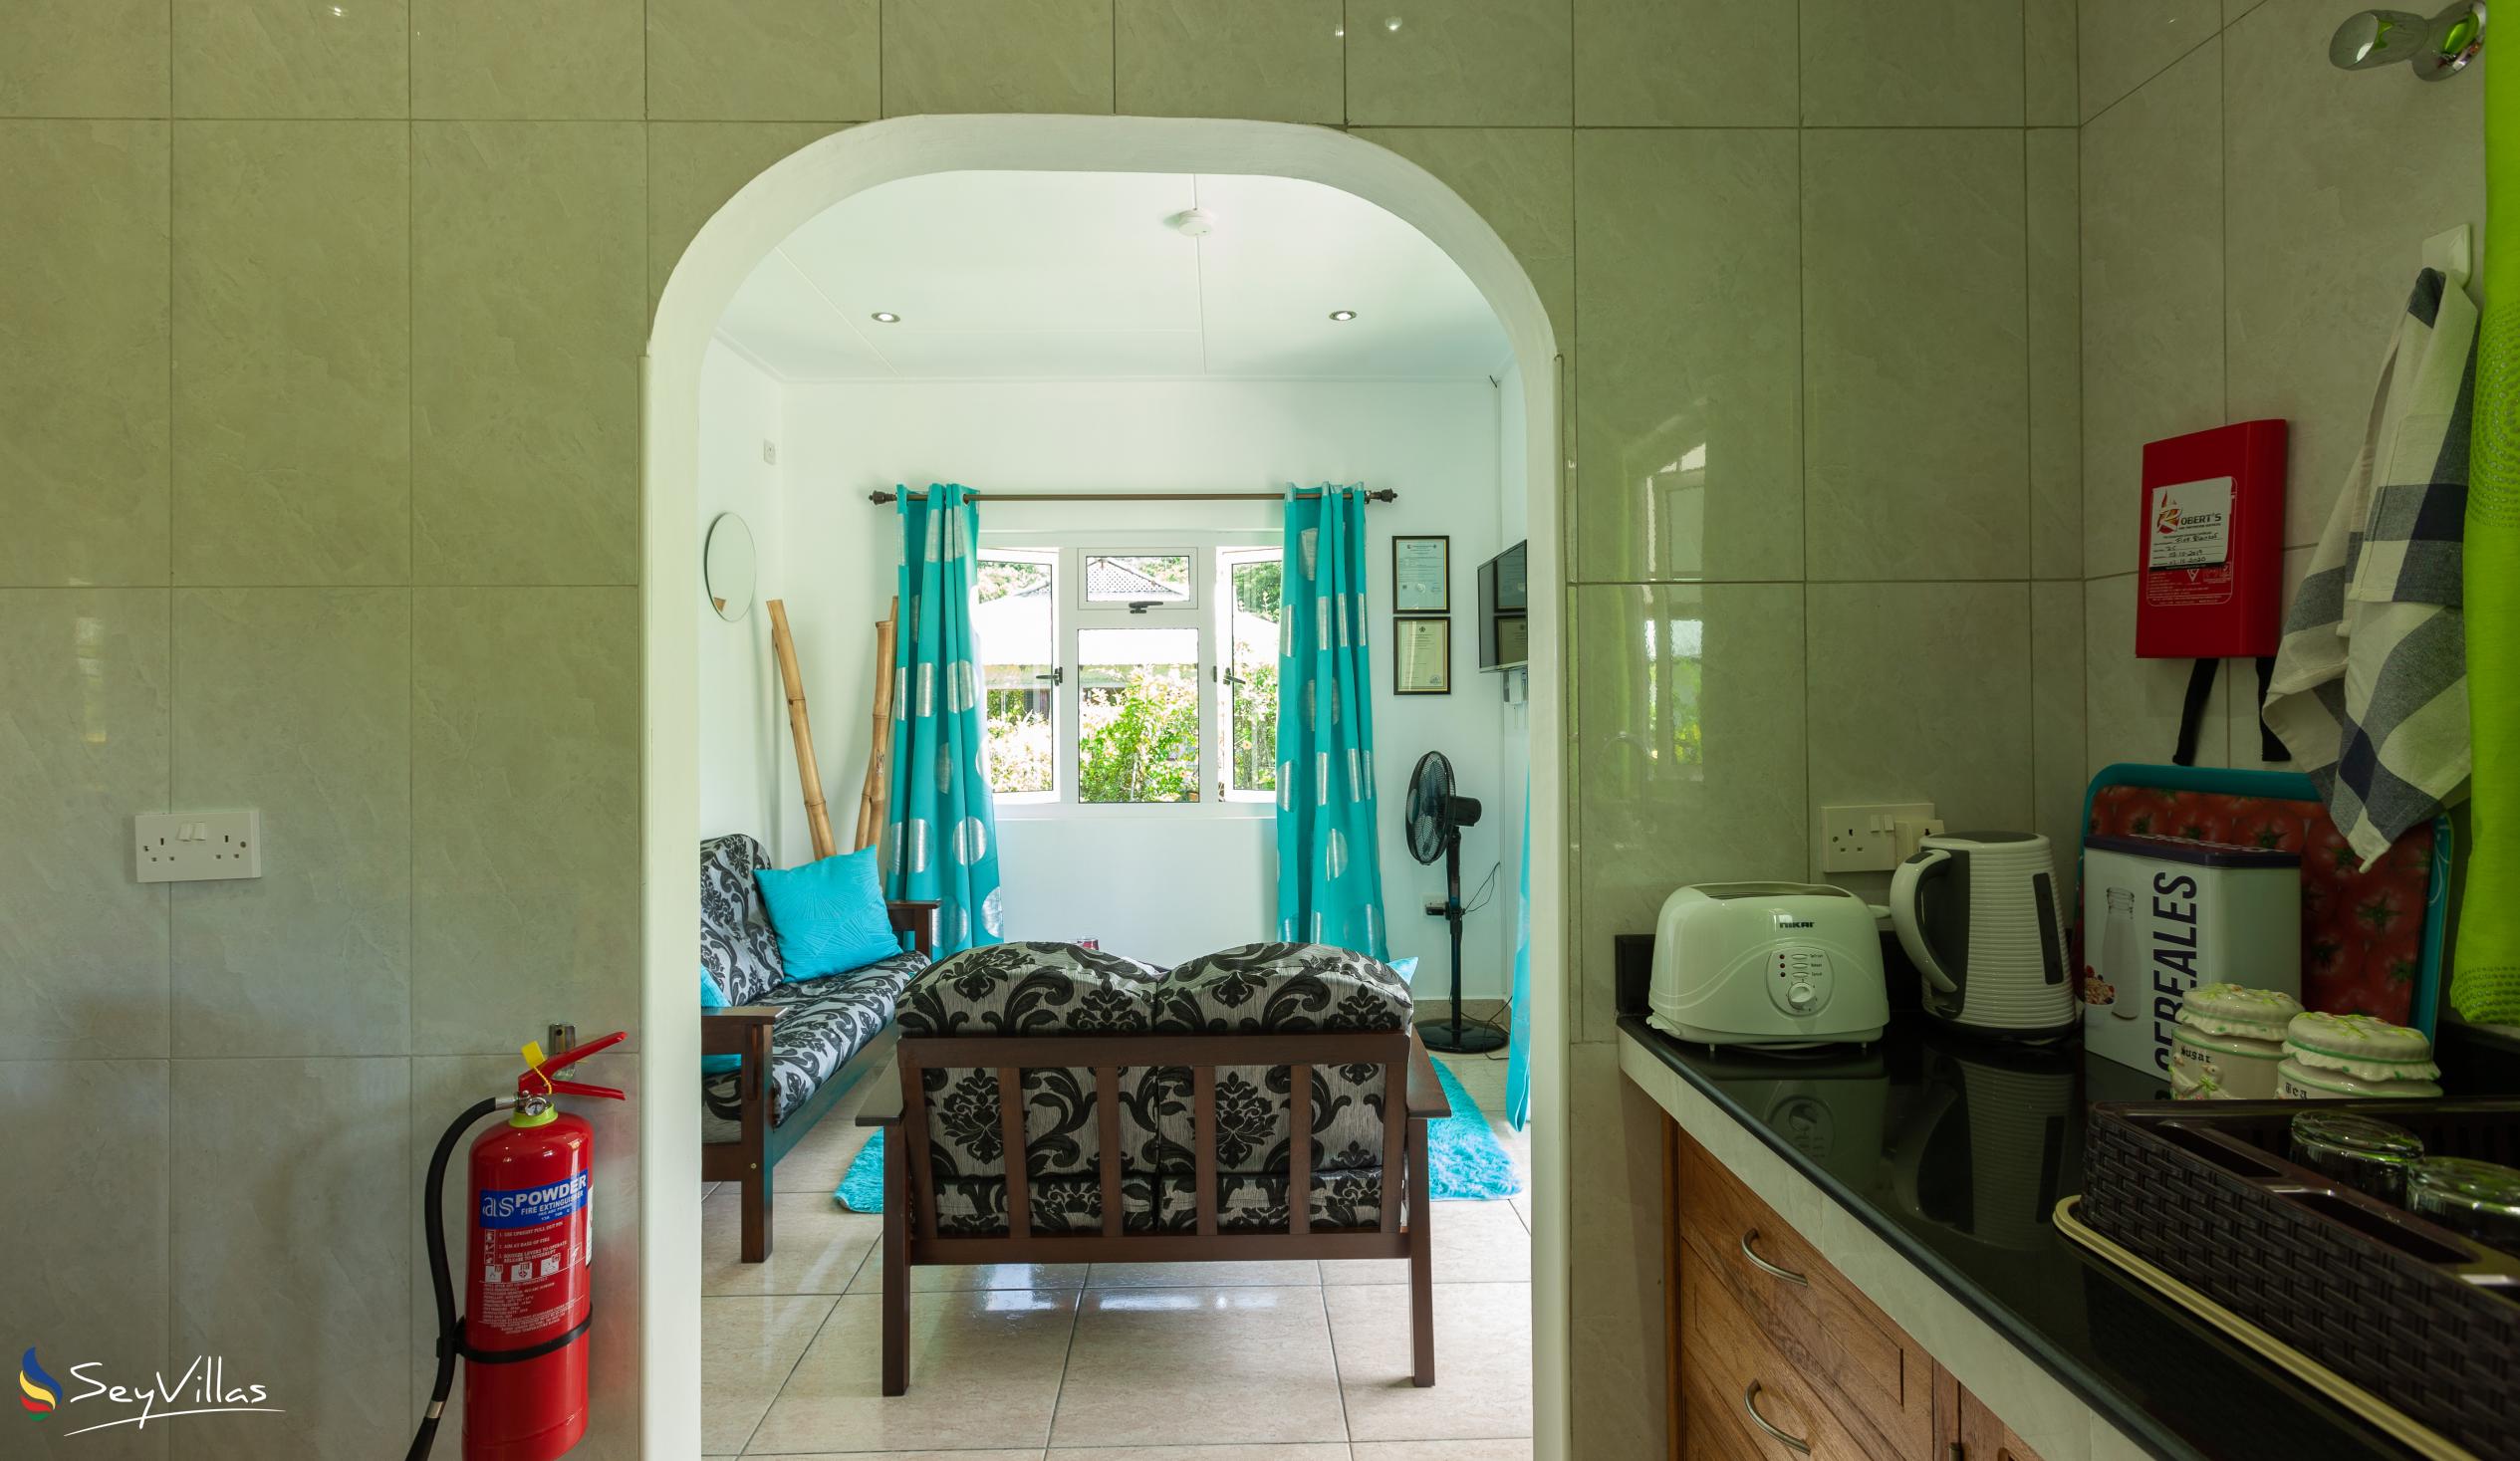 Foto 24: Destination Self-Catering - Villa con 1 camera - Praslin (Seychelles)